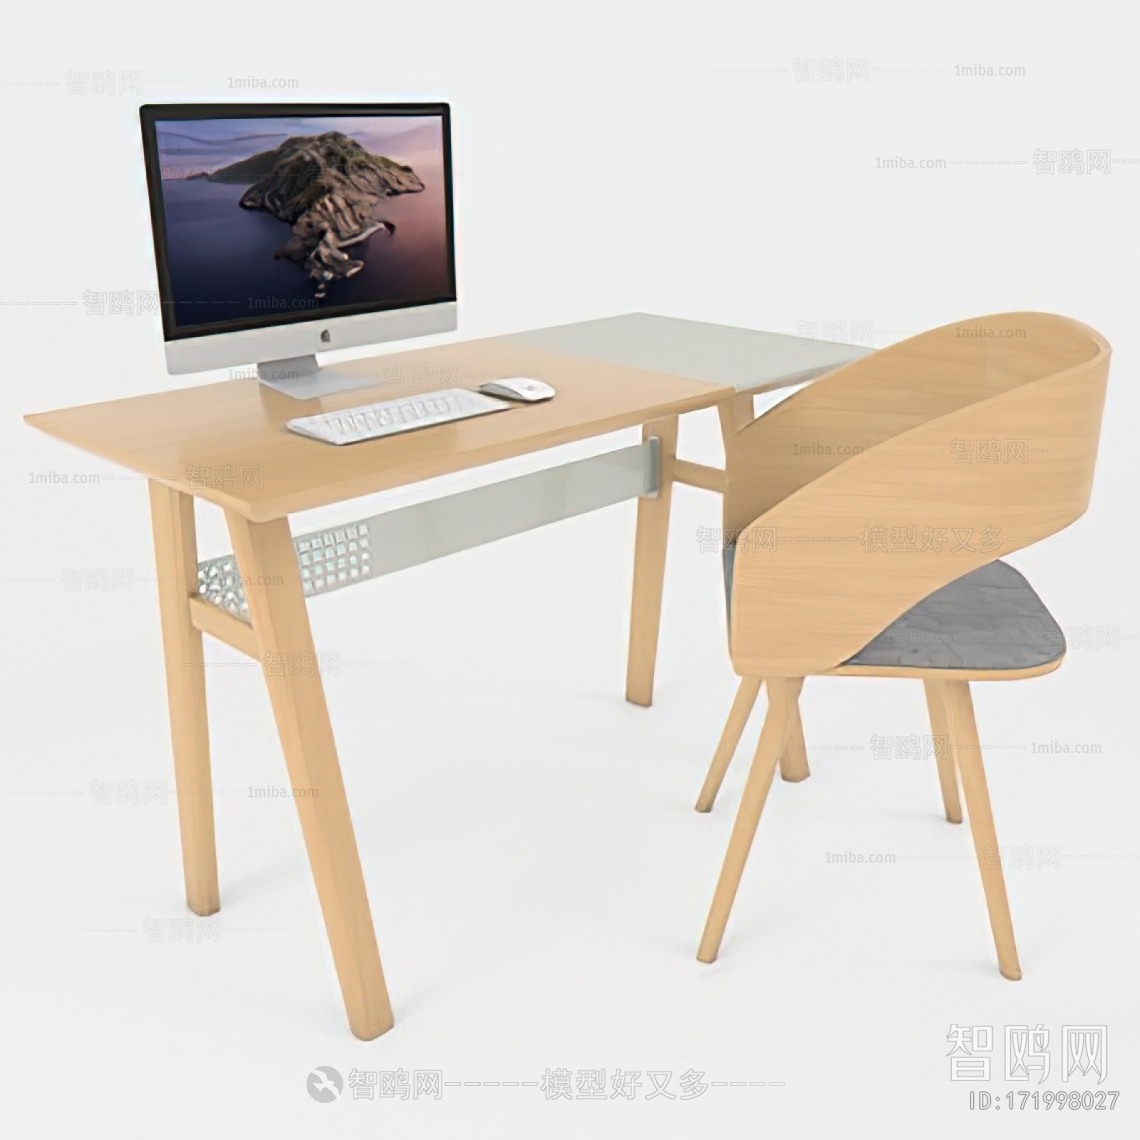 Modern Desk